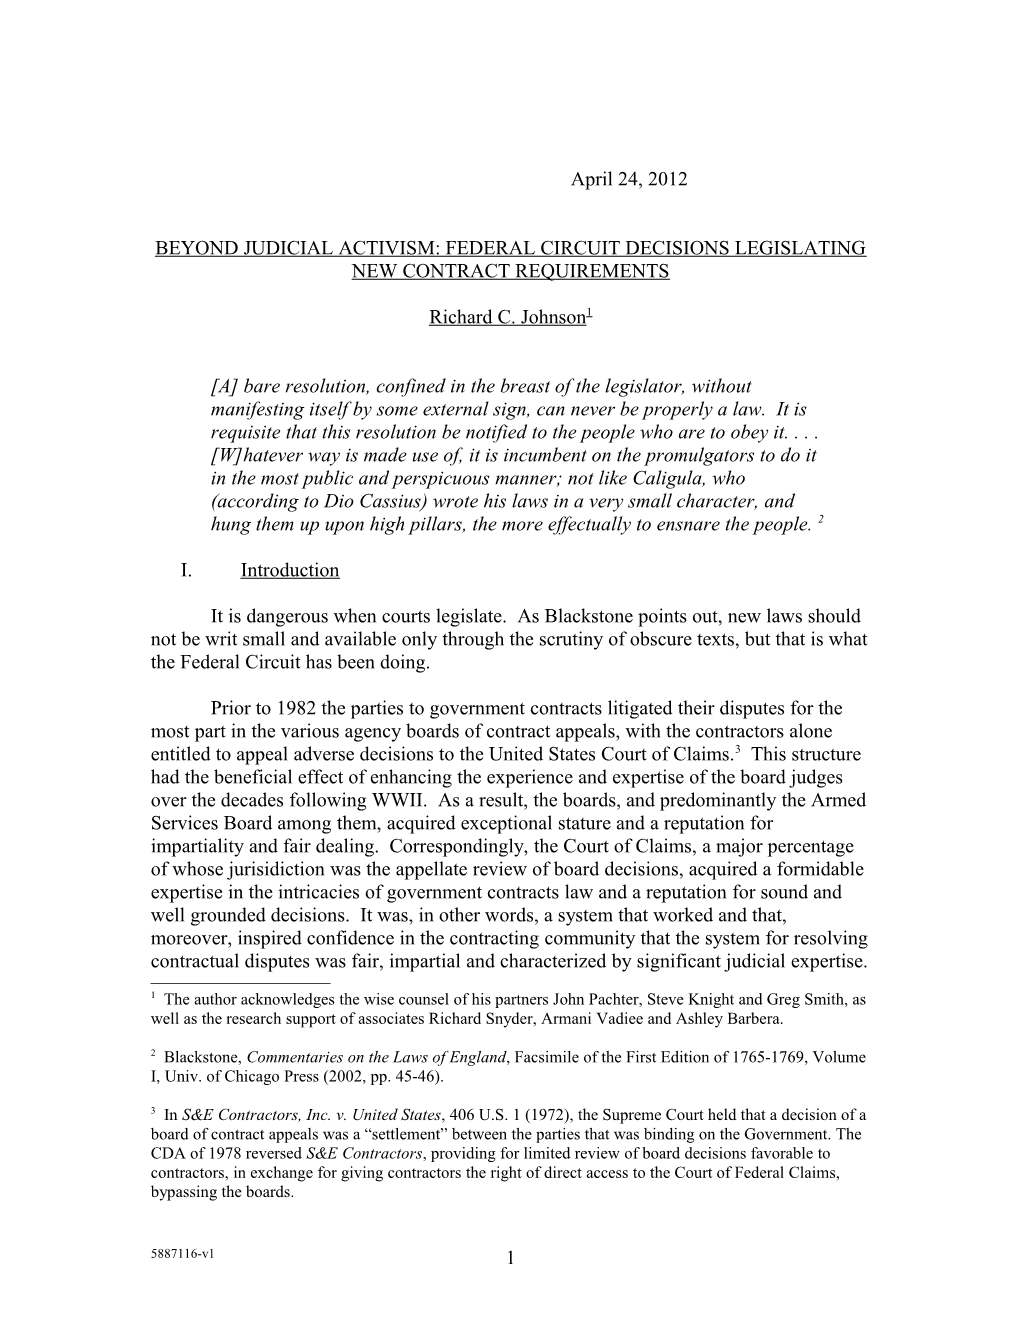 Beyond Judicial Activism: Federal Circuit Decisions Legislating Newcontract Requirements